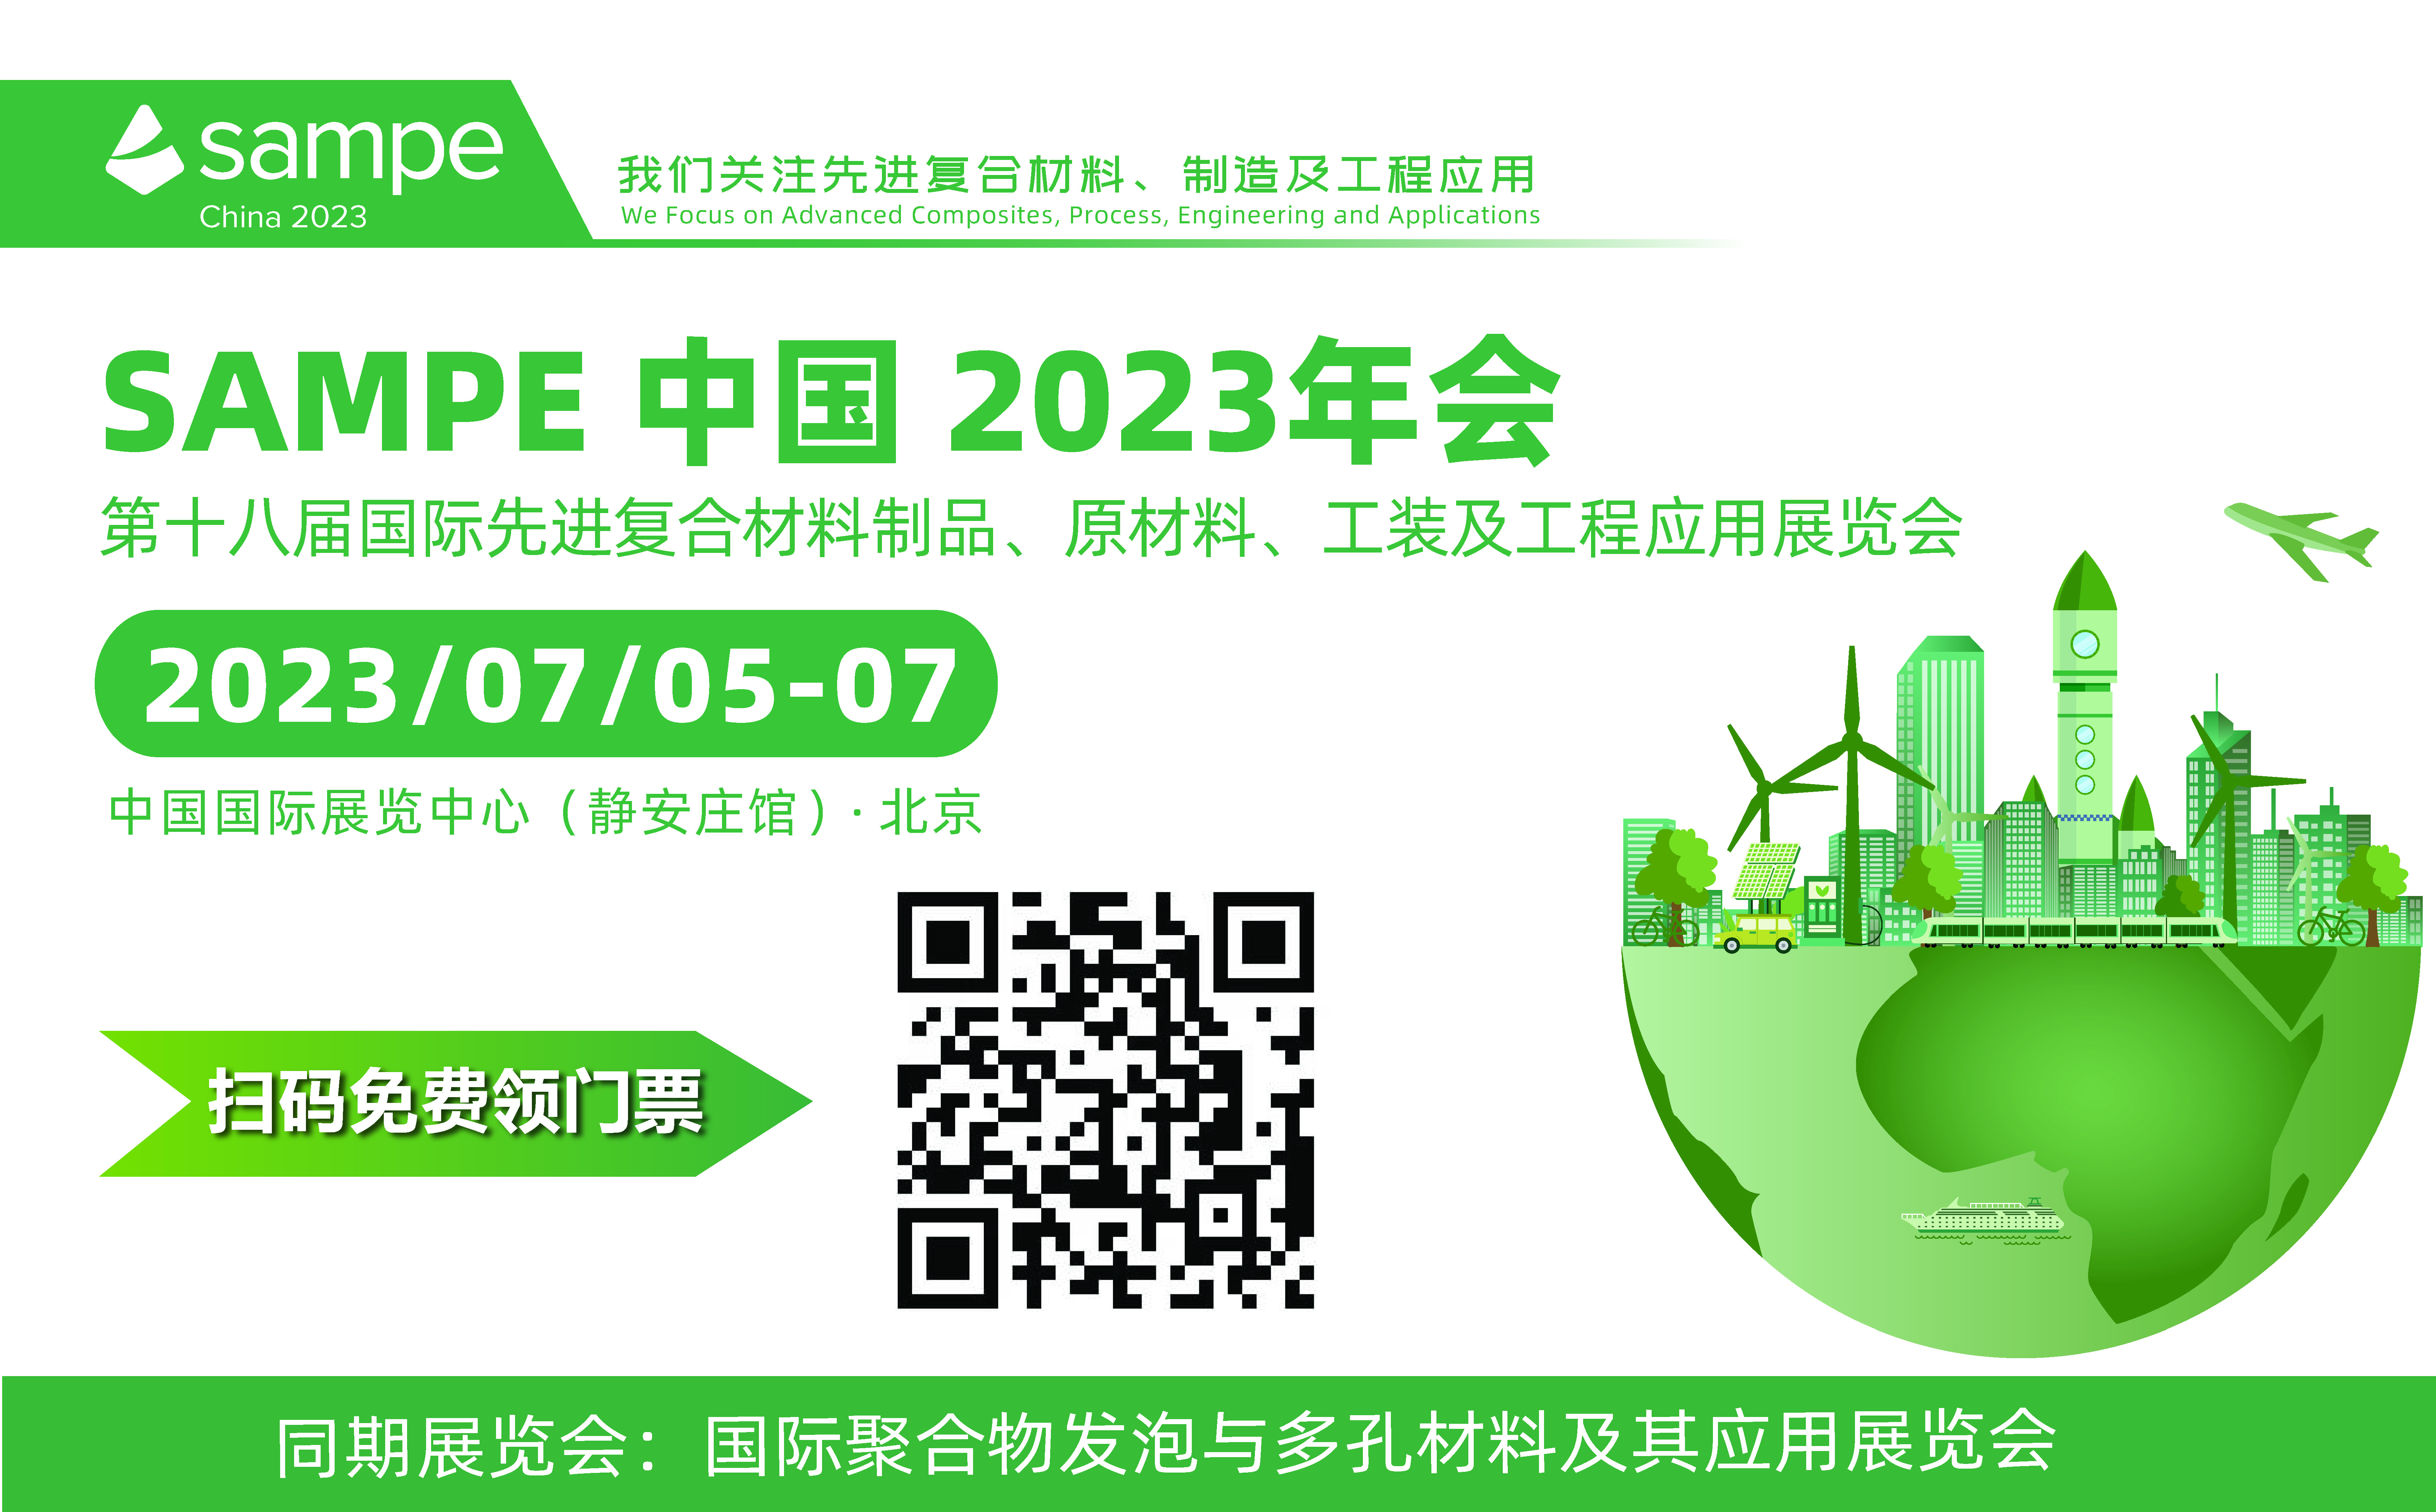 SAPME中国2023年会 第十八届国际先进符合材料制品、原材料、工装及工程应用展览会